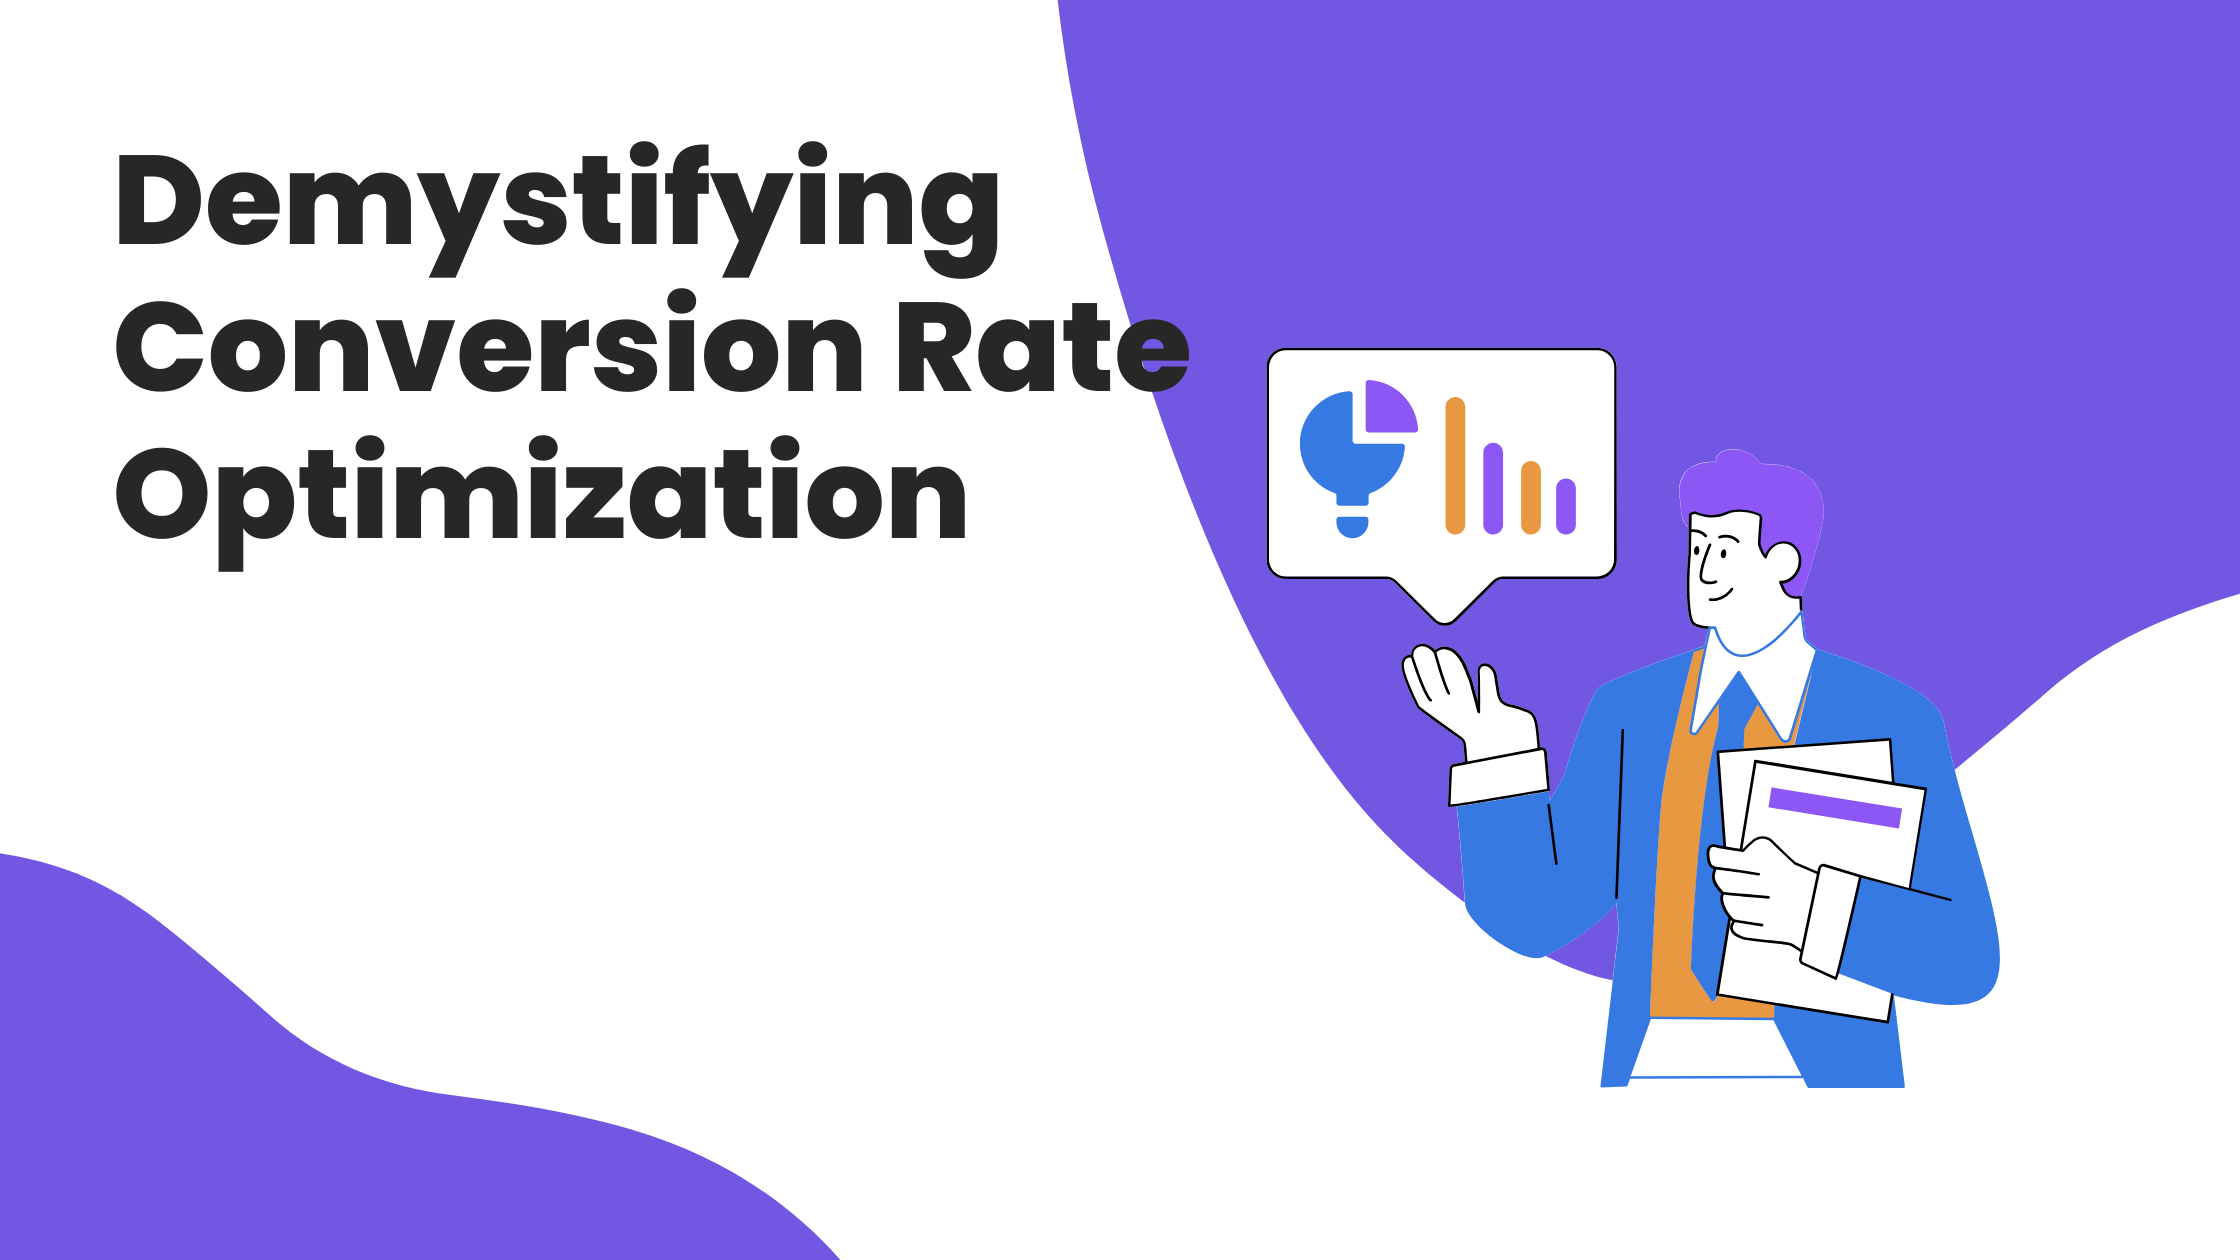 Demystifying Conversion Rate Optimization